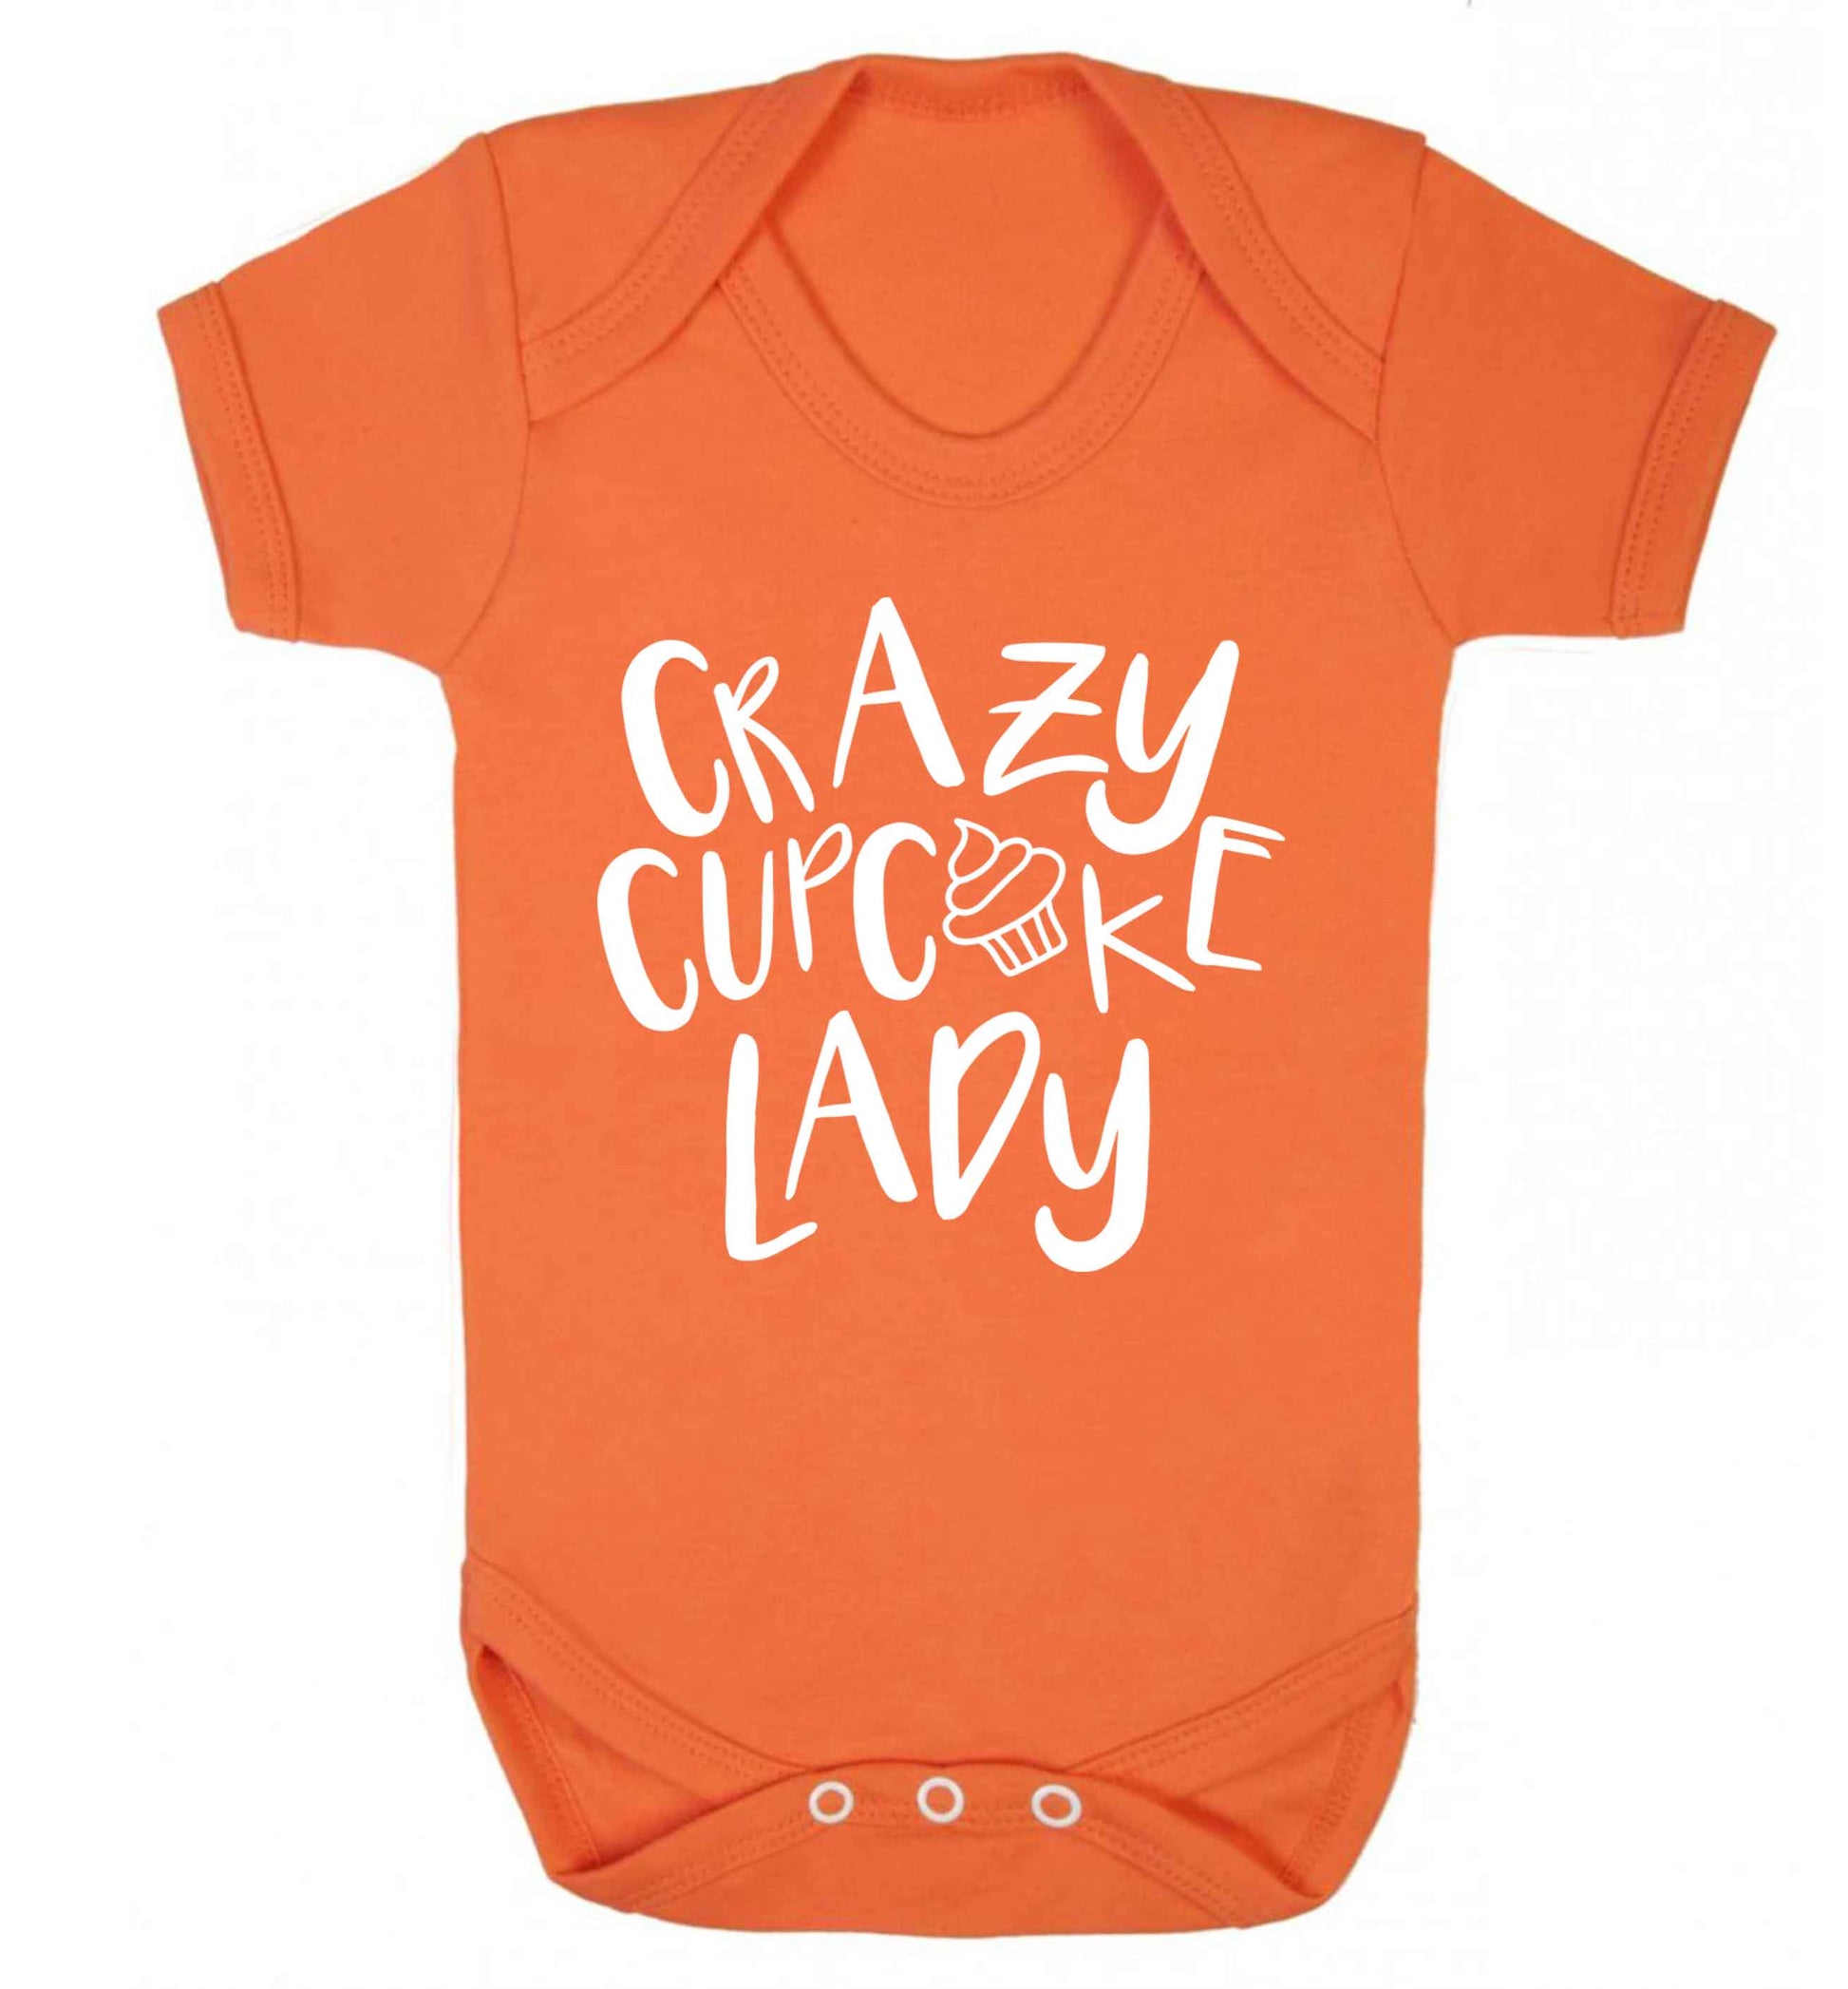 Crazy cupcake lady Baby Vest orange 18-24 months